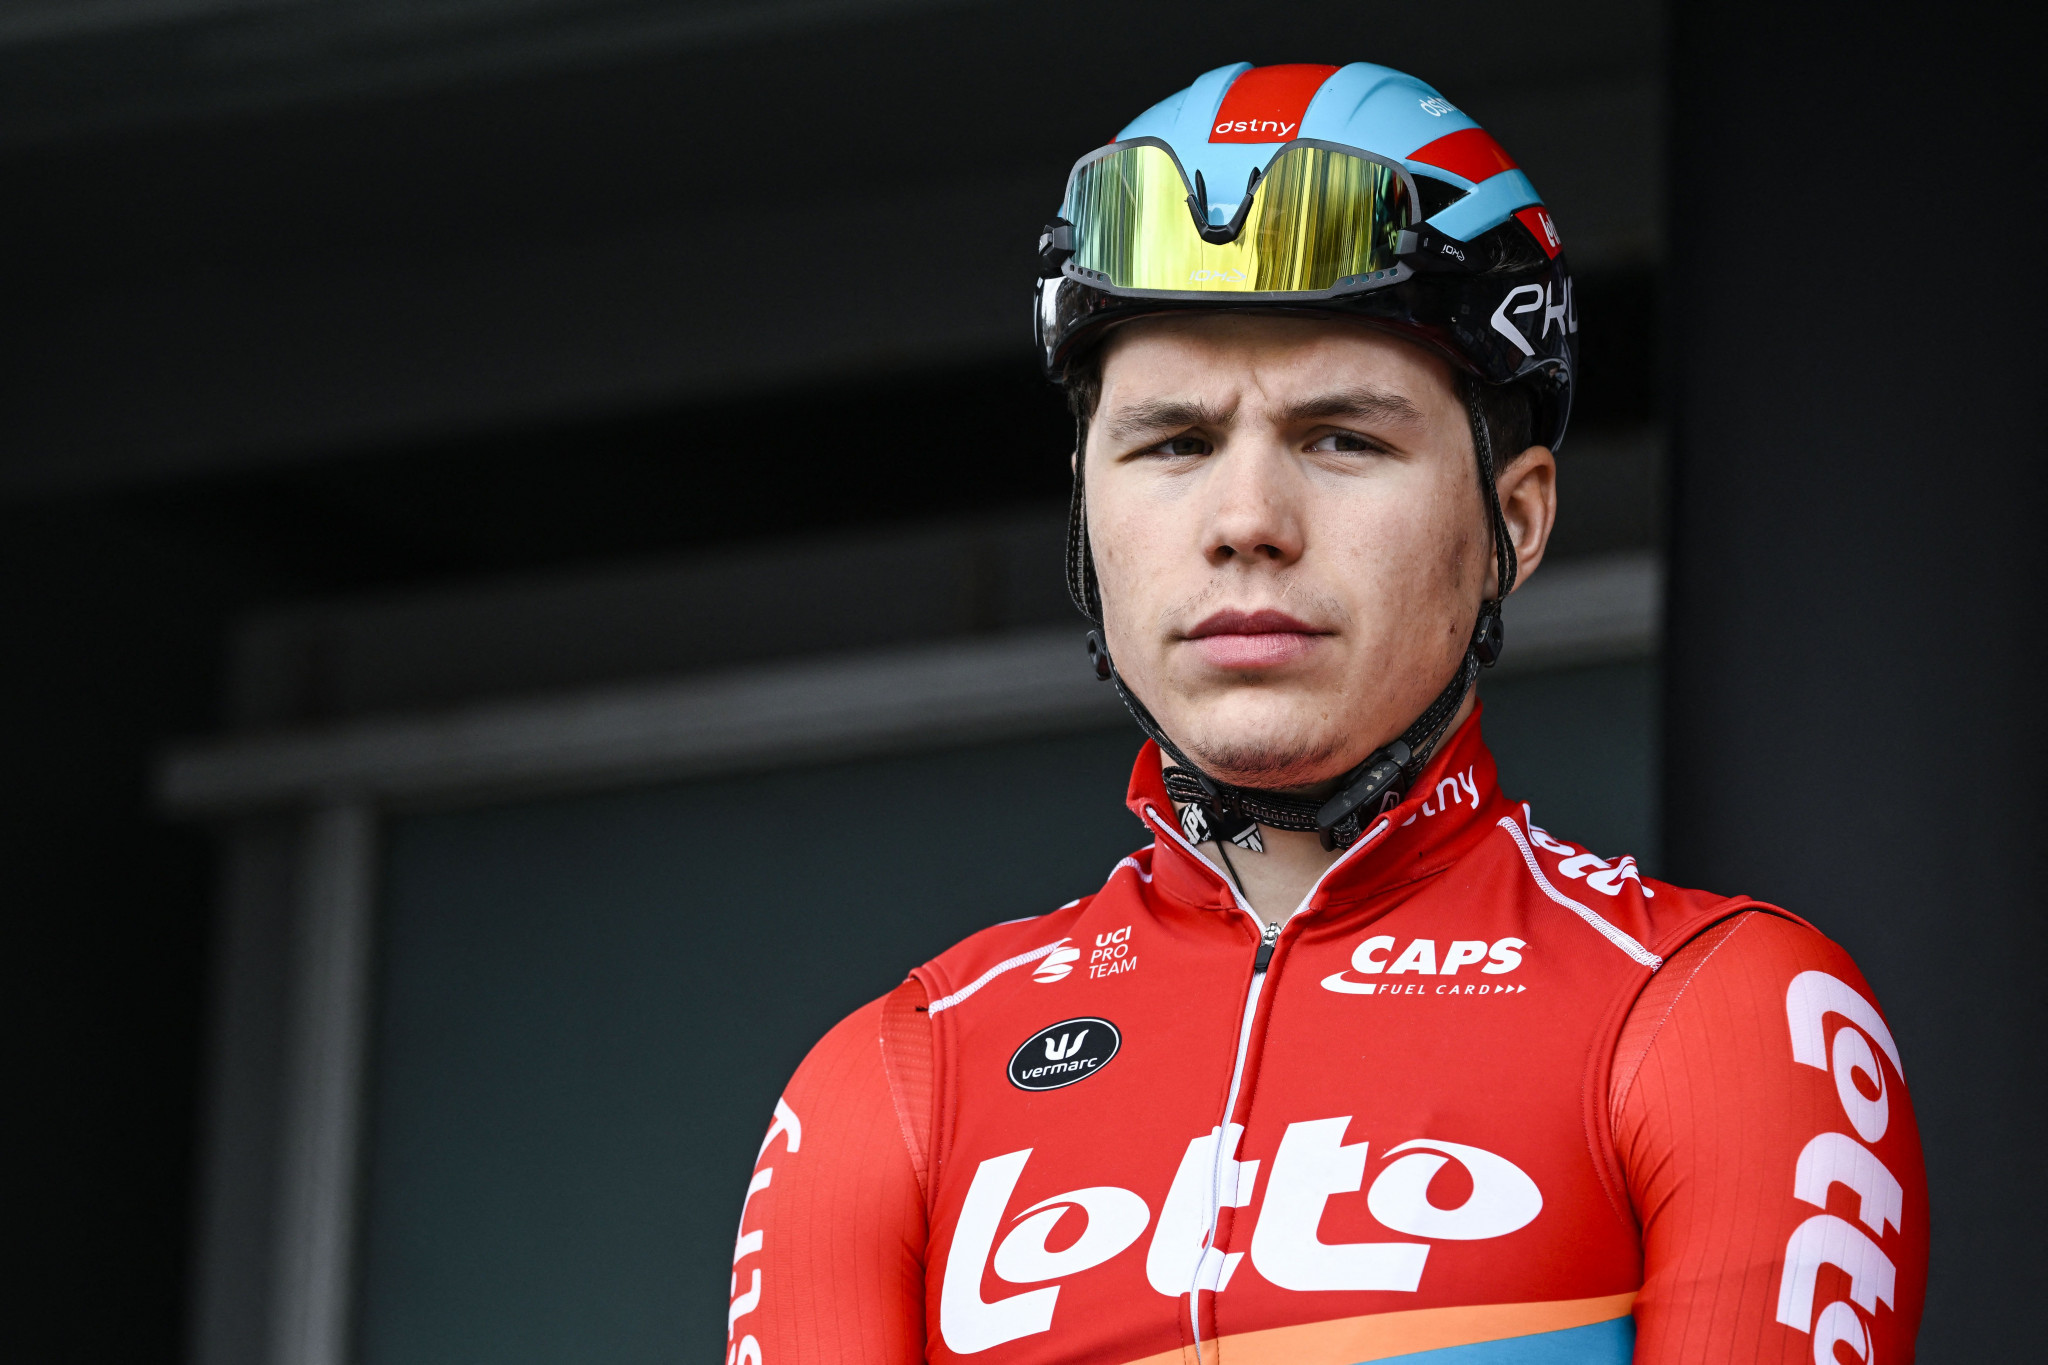 De Lie sprints to first victory on UCI World Tour at Grand Prix Cycliste de Québec